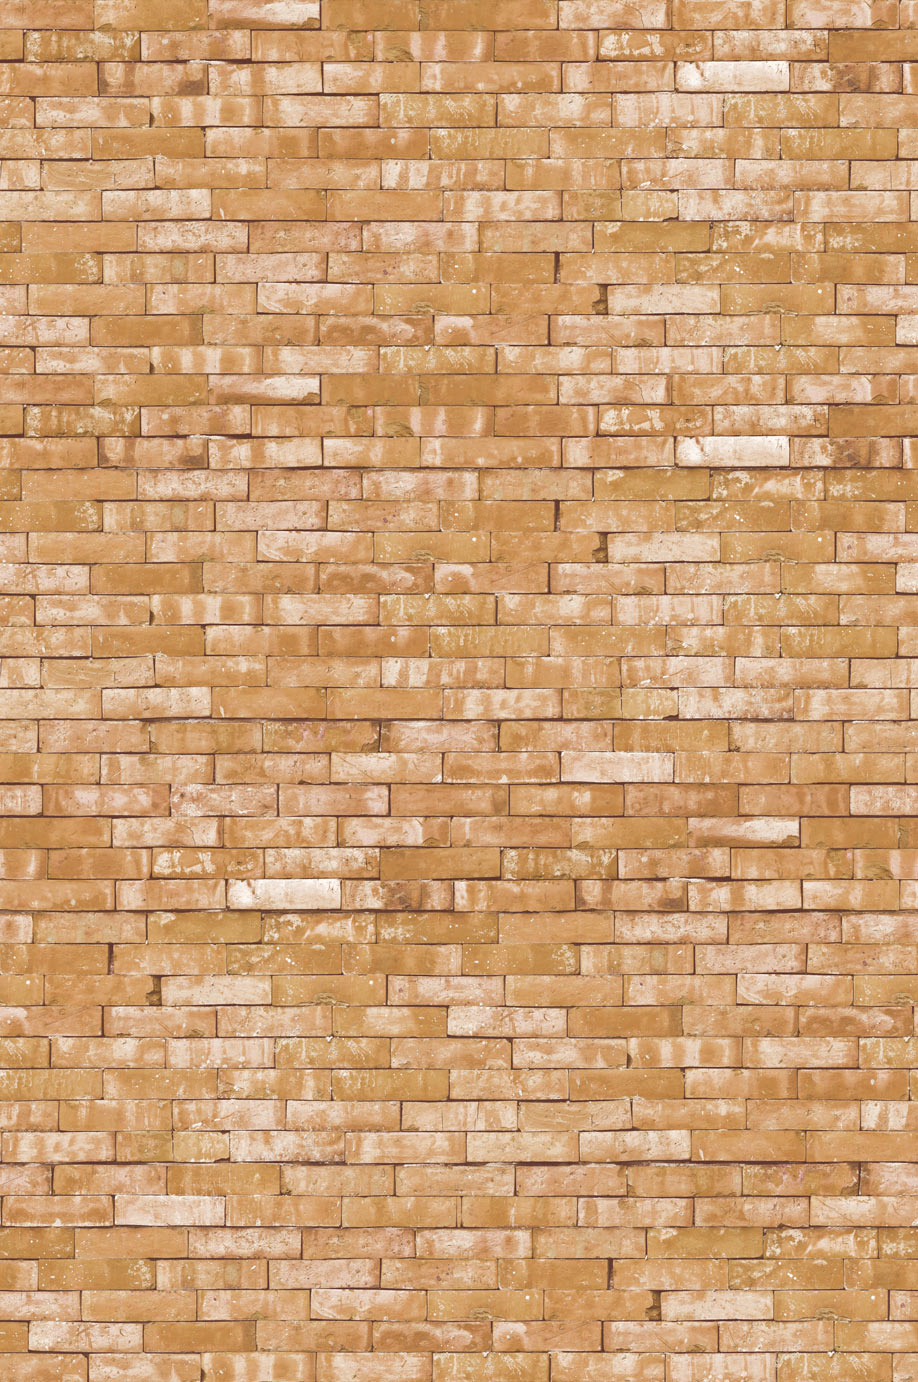 Wallpower Junior Bricks & Blocks mural